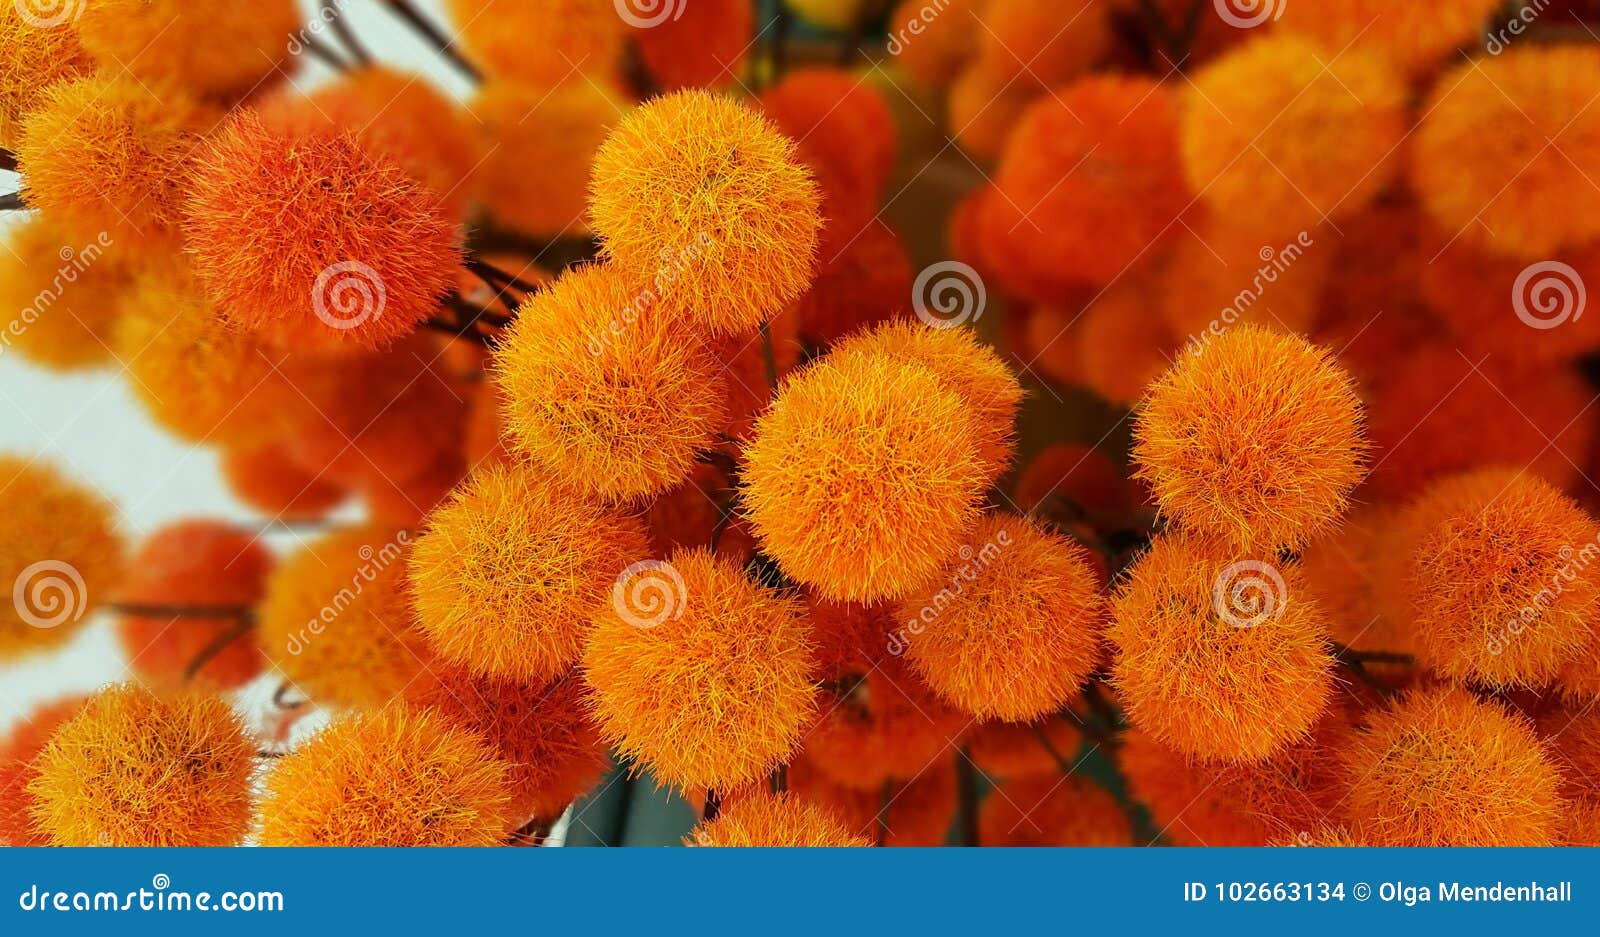 Orange Yellow Pom Pom Bush. Abstract Background. Stock Photo - Image of cozy, colorful: 102663134